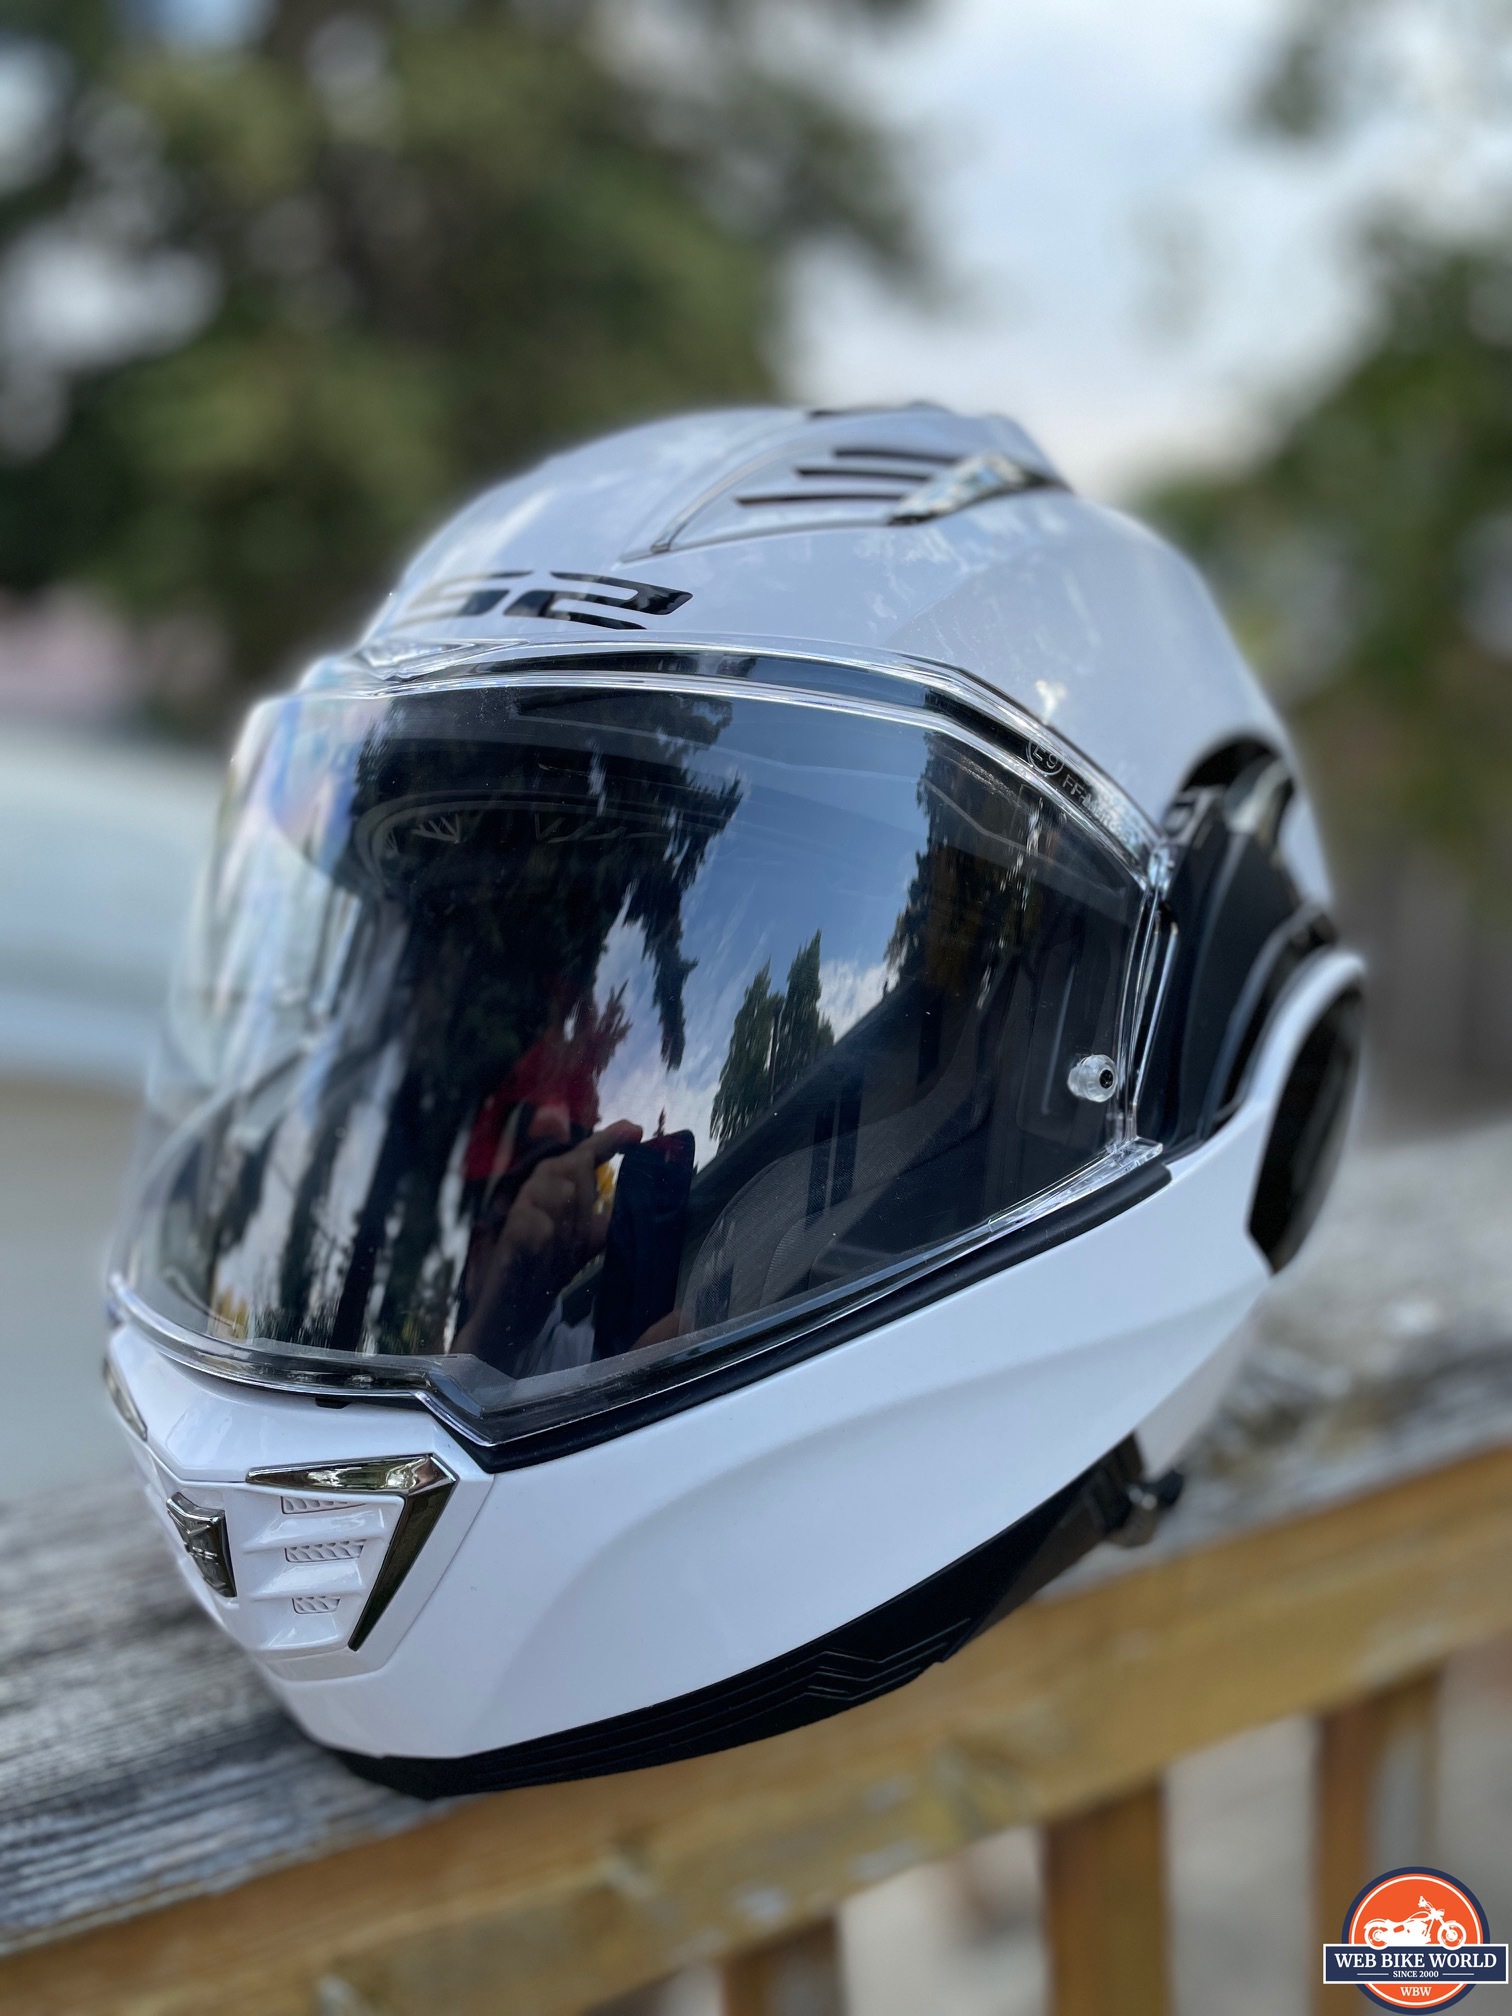 LS2 Valiant II helmet with visor down resting on railing